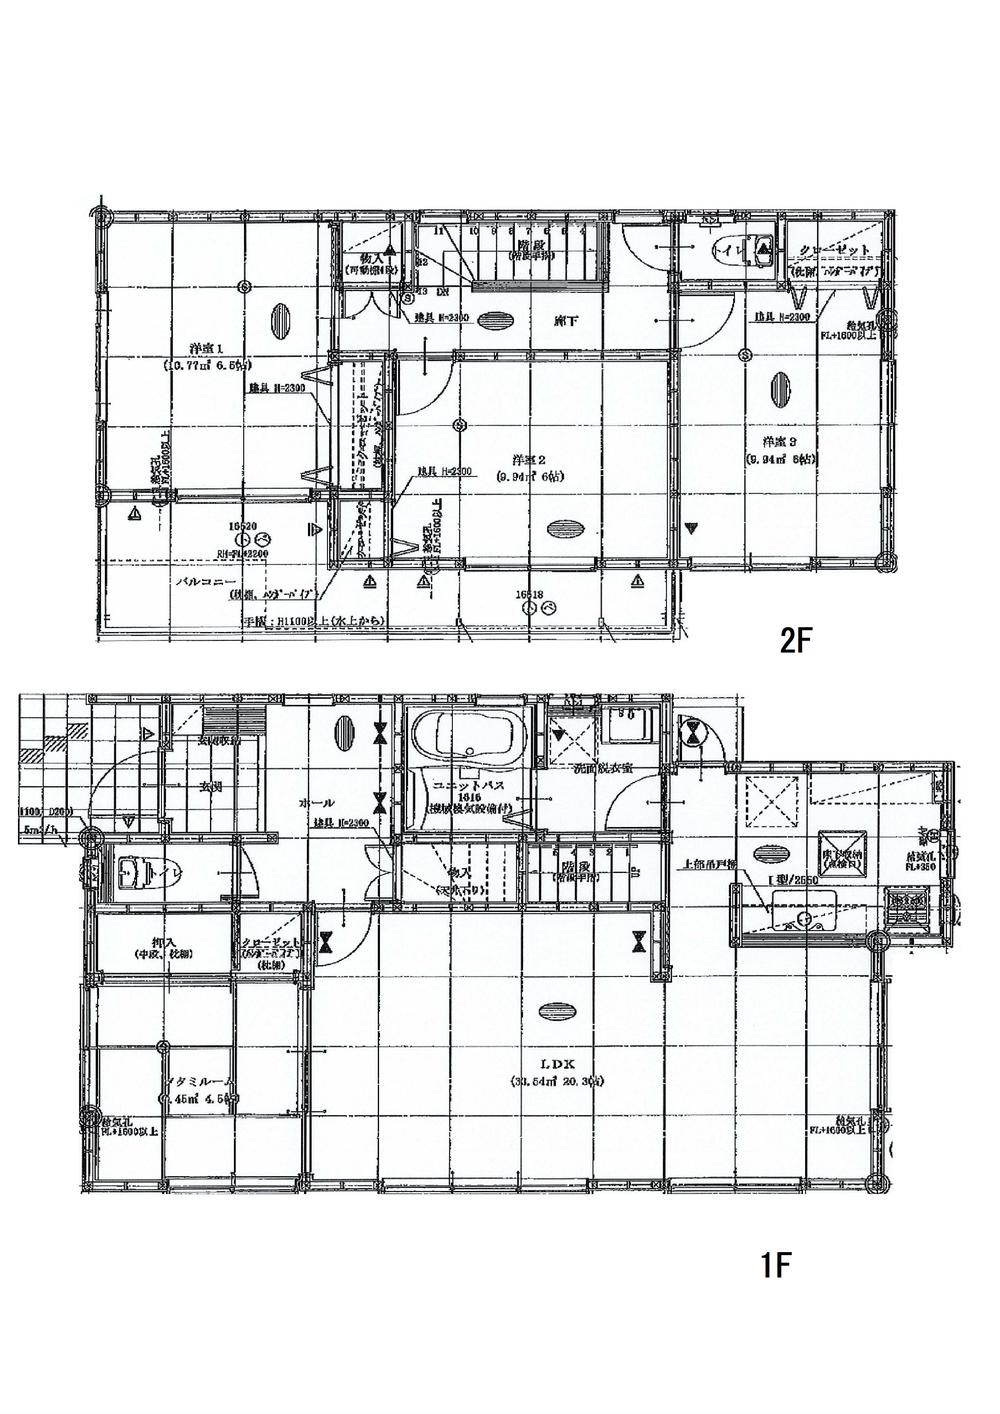 Floor plan. Price 41,850,000 yen, 4LDK, Land area 157.67 sq m , Building area 104.54 sq m